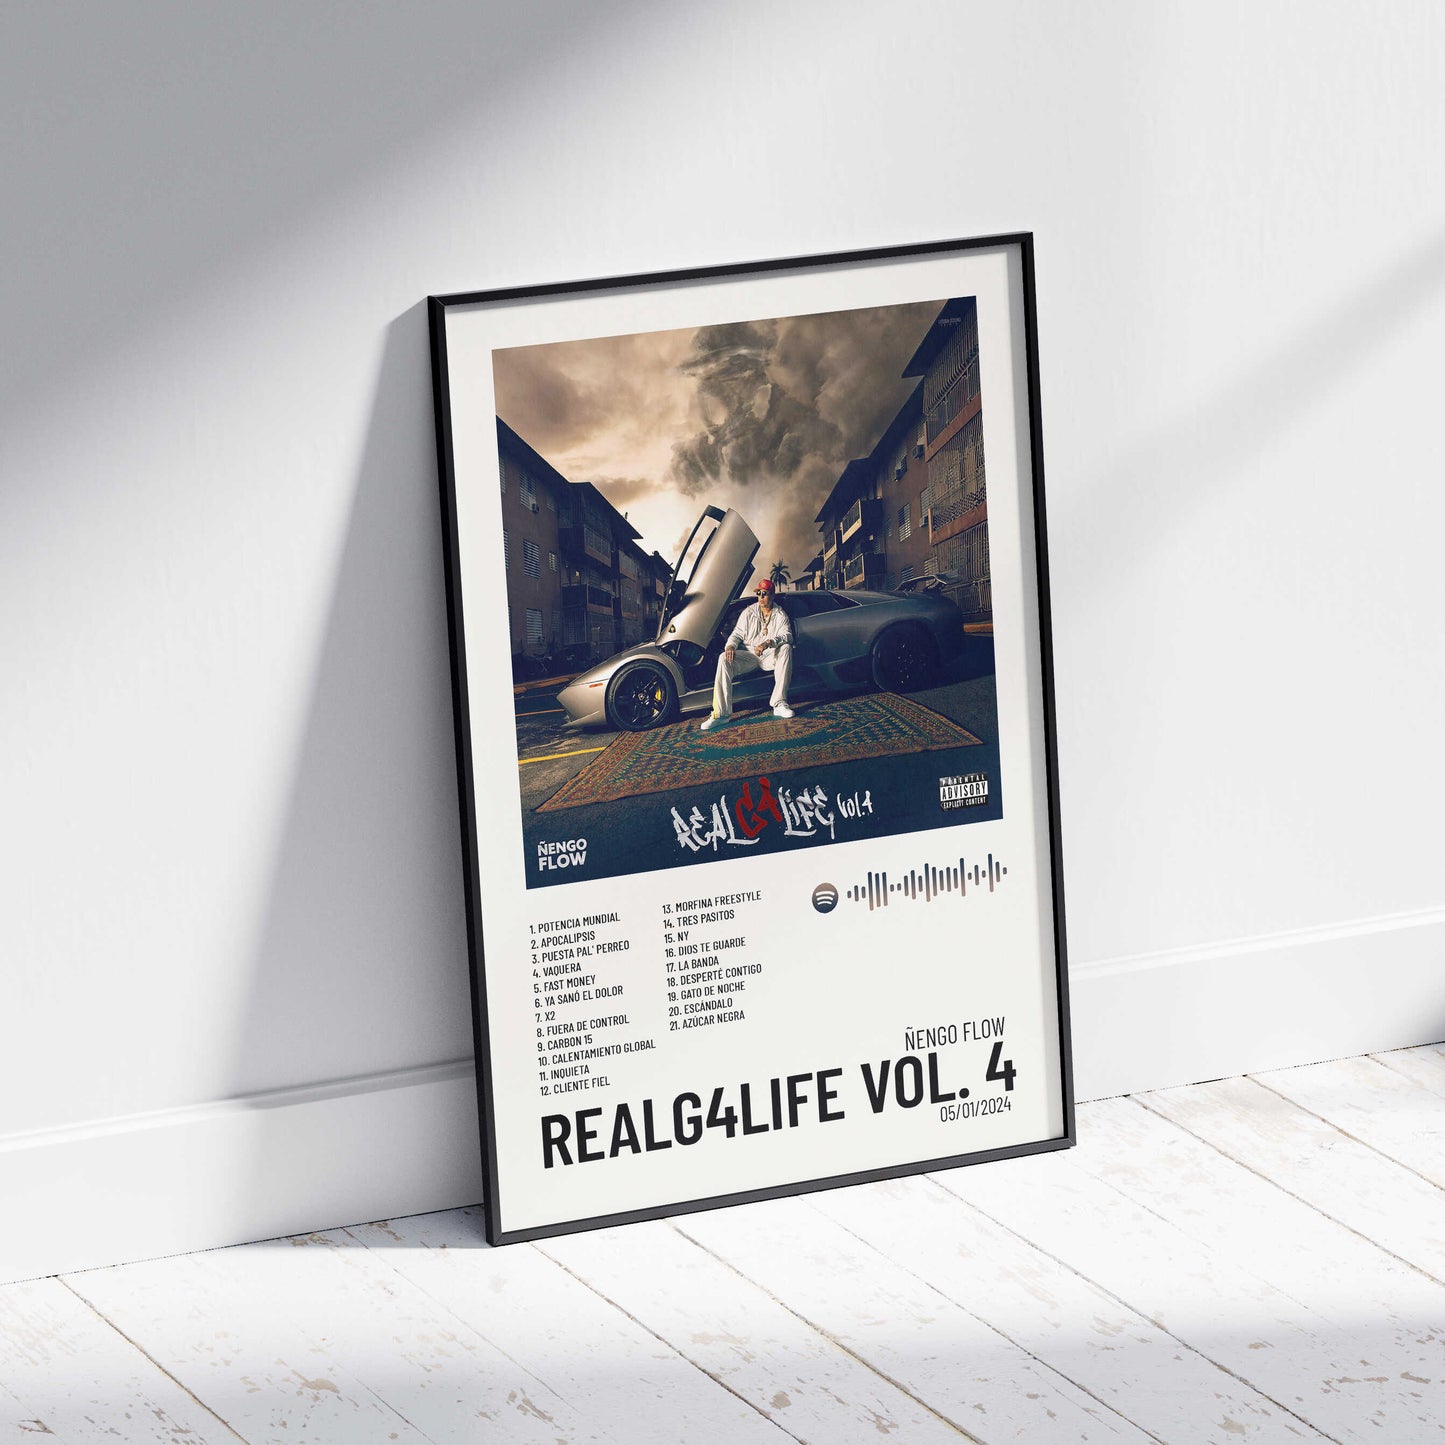 RealG4Life Vol. 4